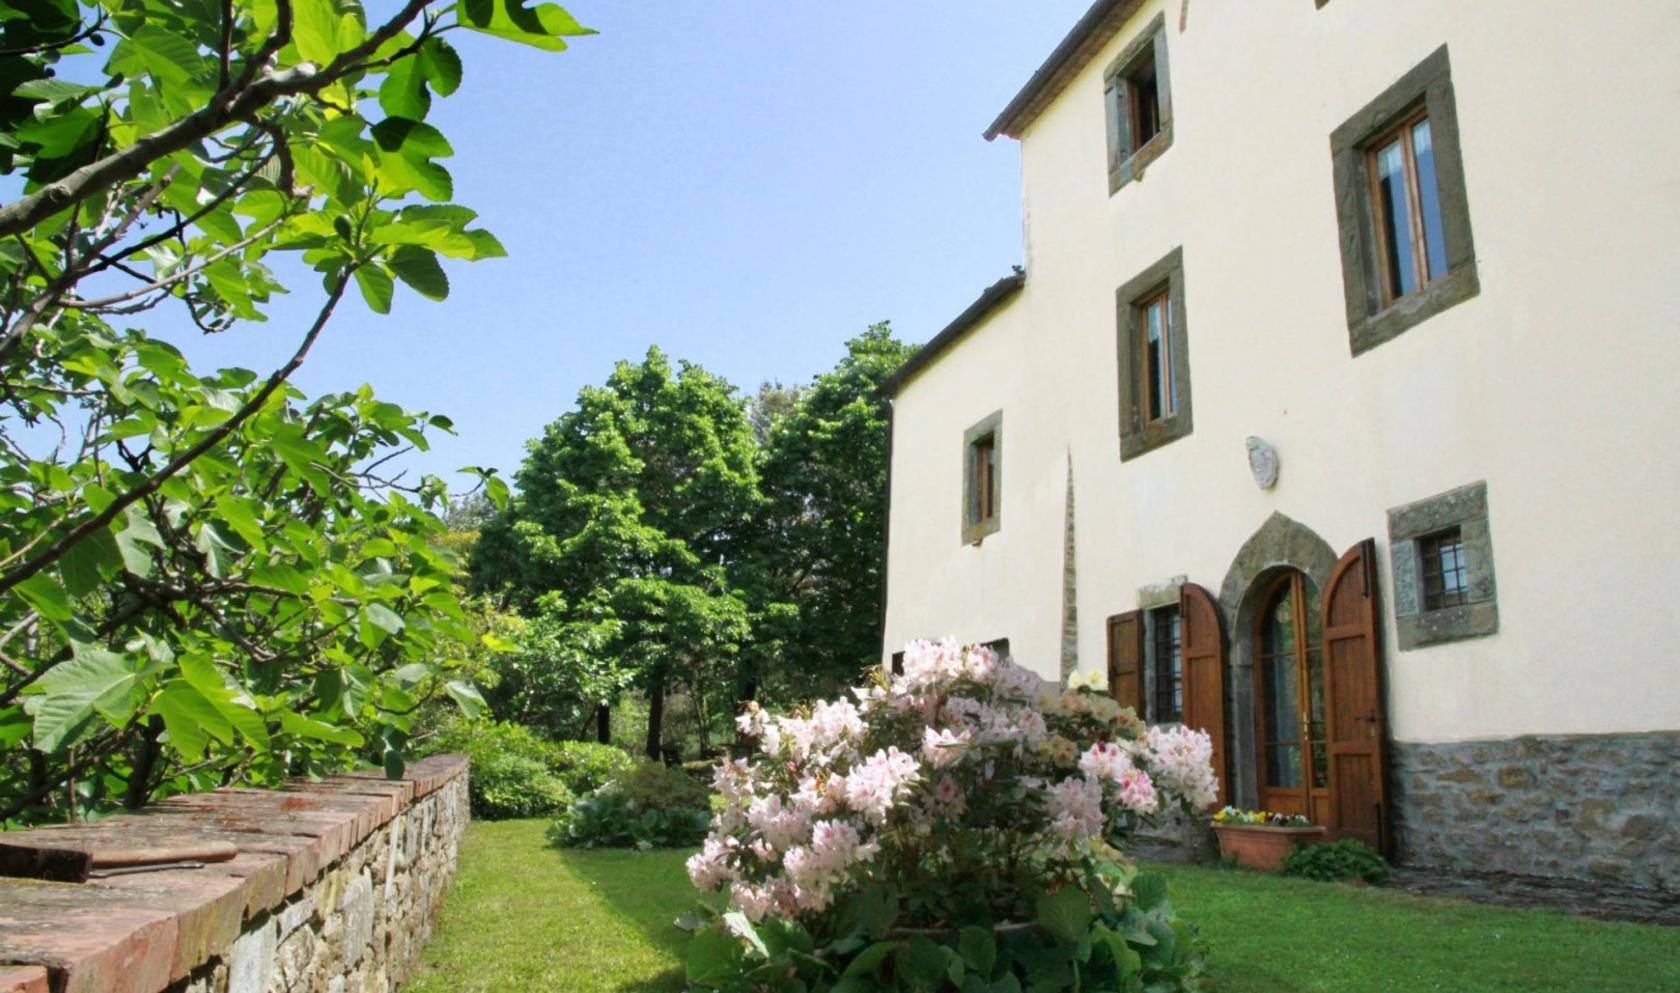 Toscana Immobiliare - Cortona. Tuscany Luxury real estate properties near the center of the town of Cortona. 